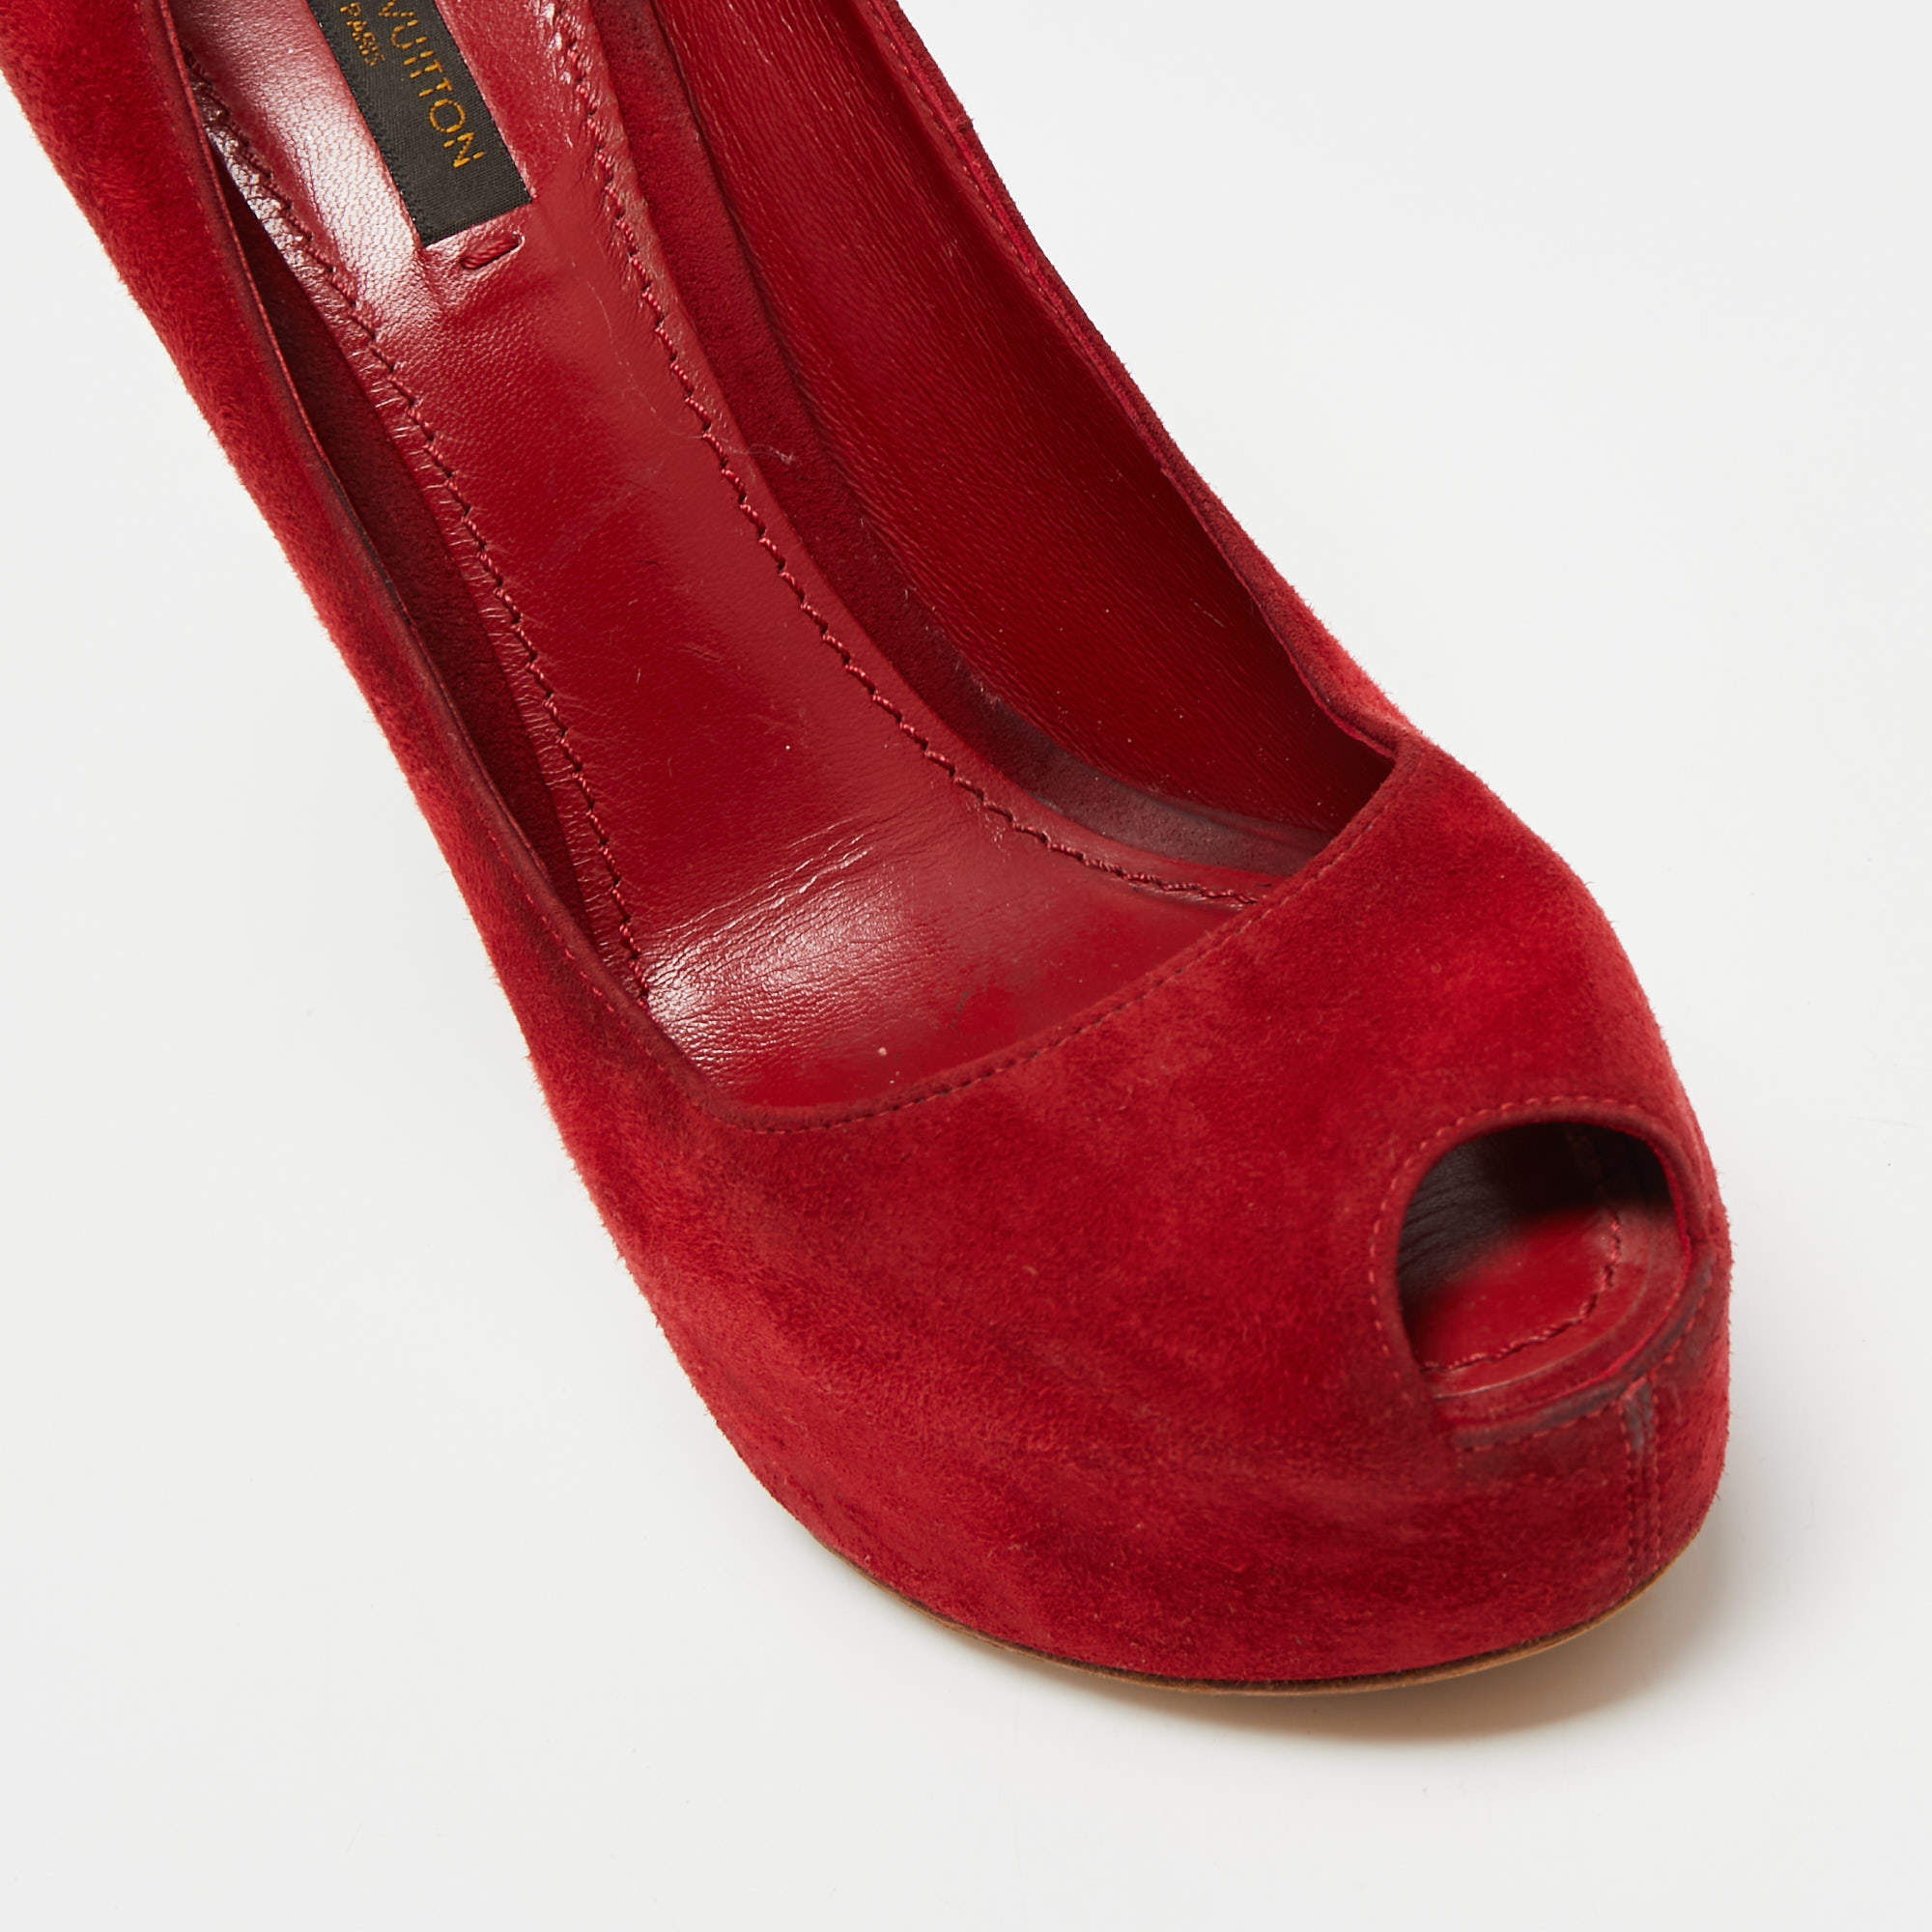 Authentic Louis Vuitton Red Suede Leather Pumps Shoes Size 37